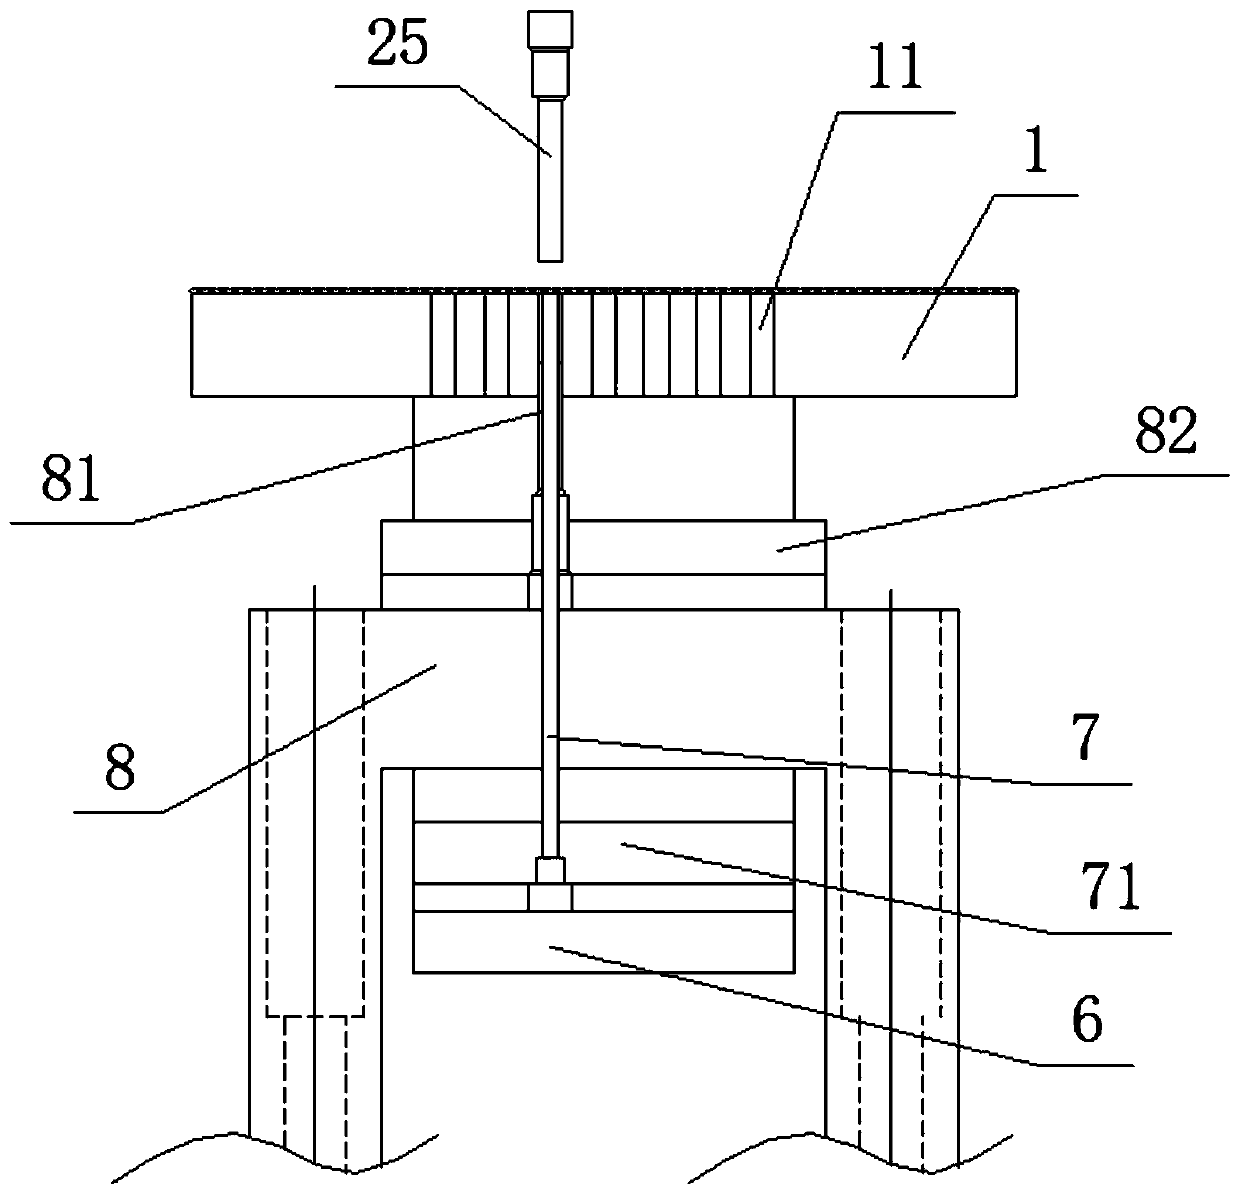 Mold frame mechanism for high-precision powder mold forming servo press